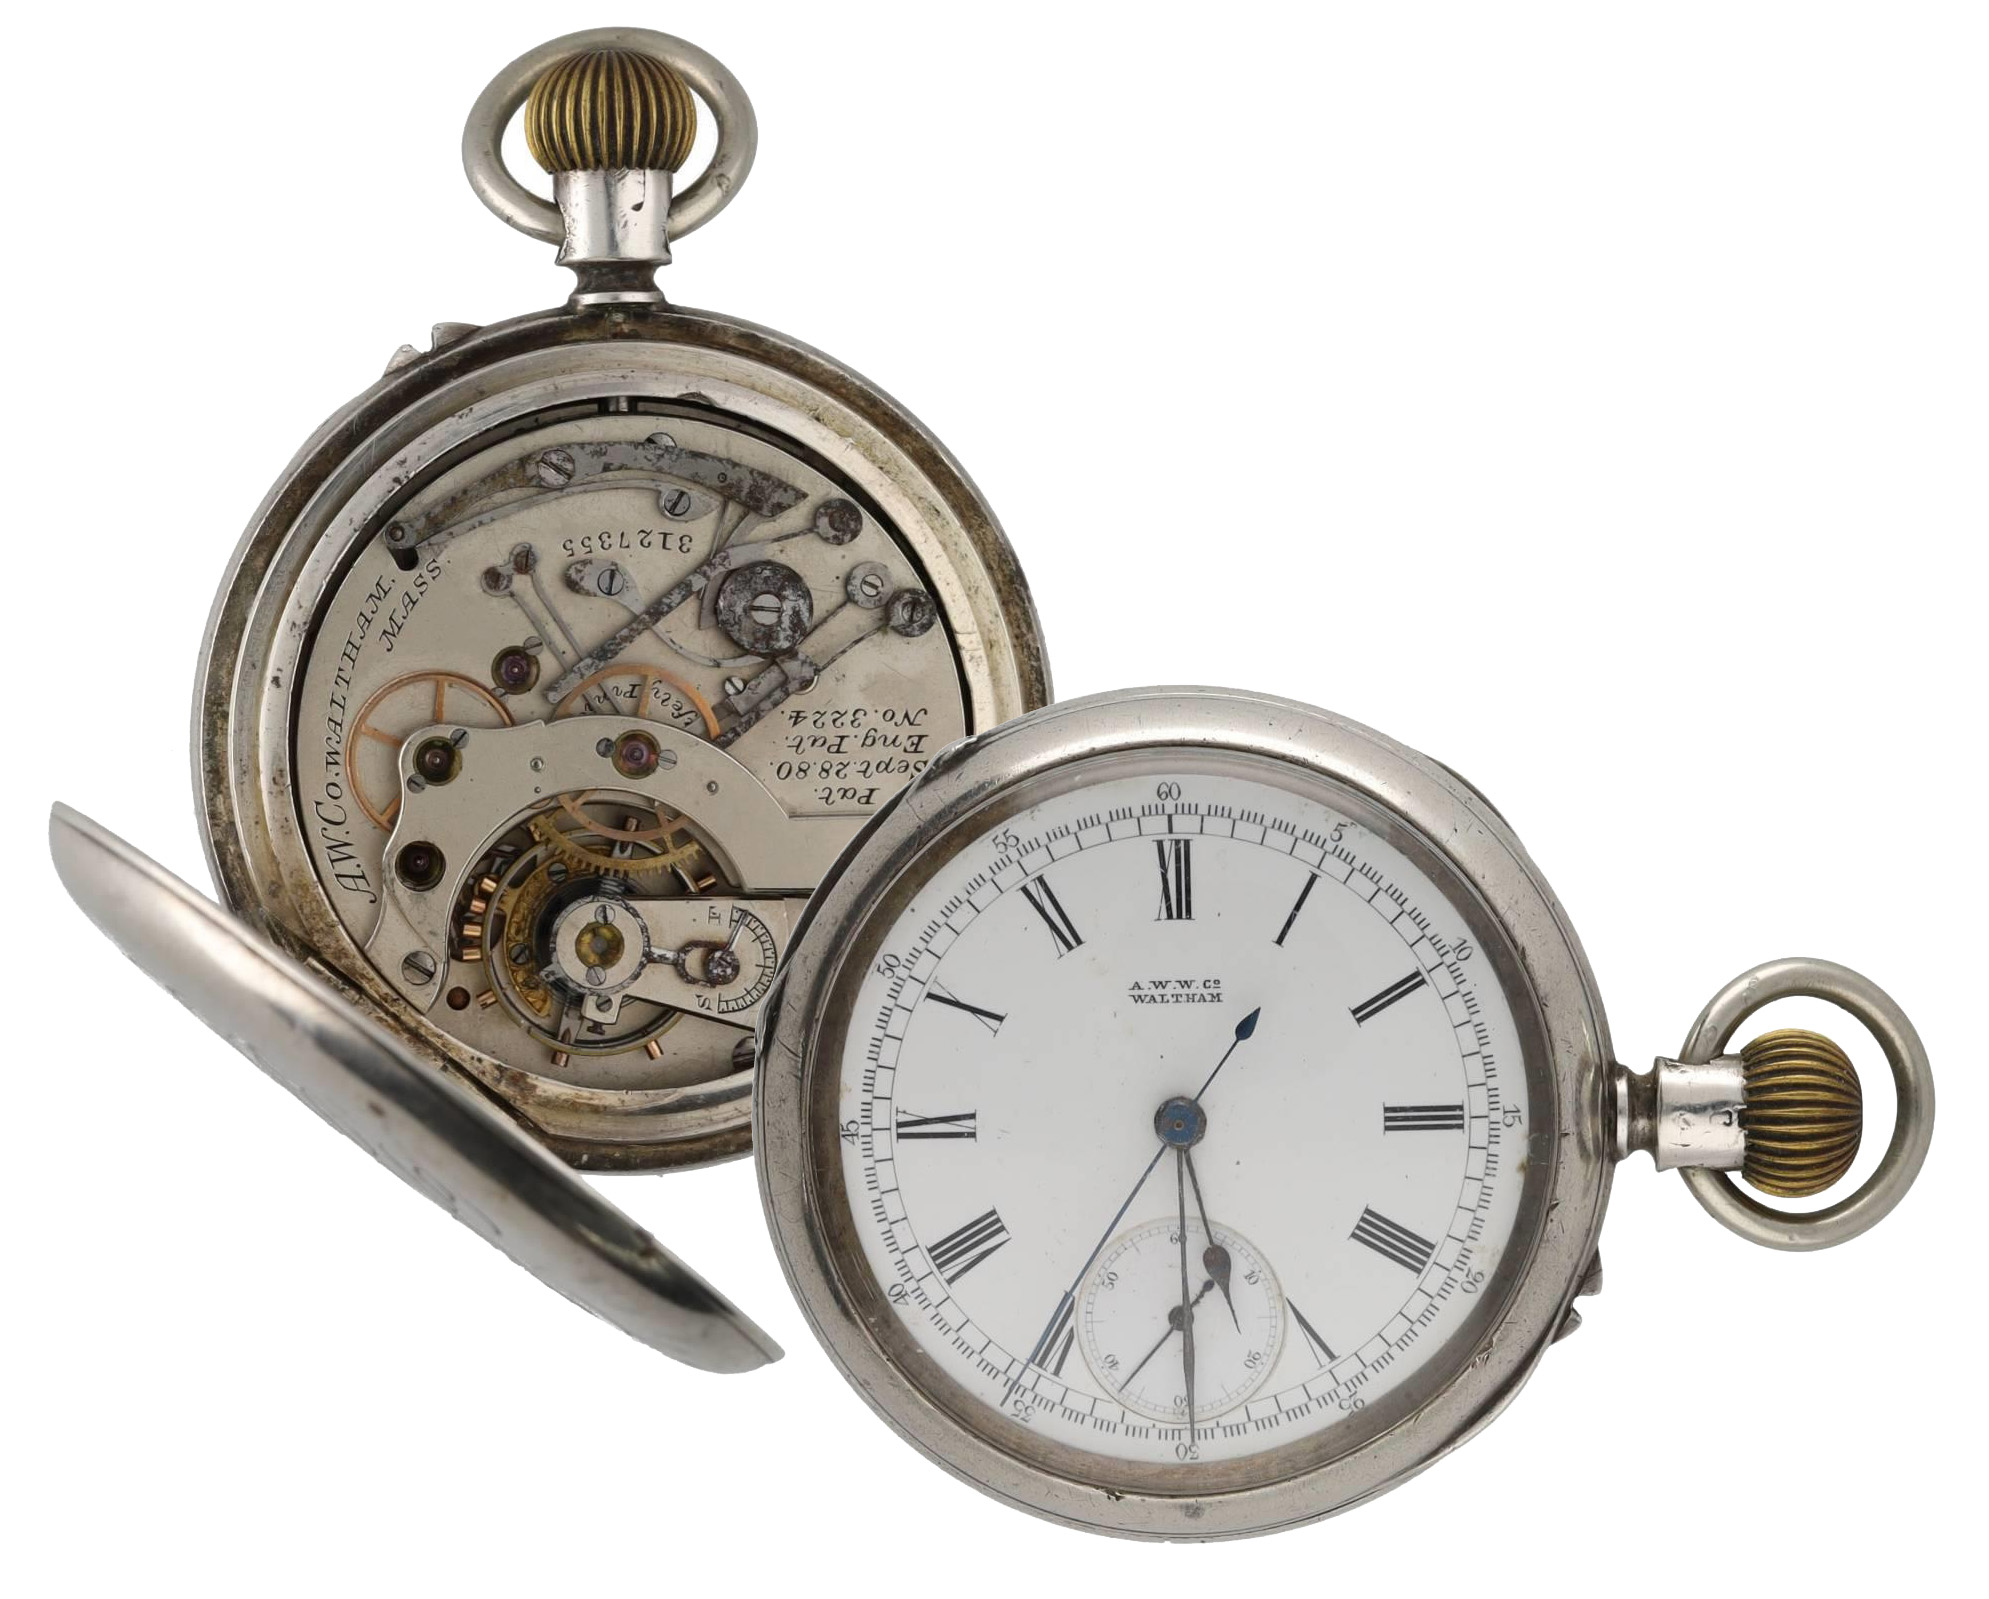 American Waltham silver chronograph lever pocket watch, circa 1886, serial no. 3127355, signed